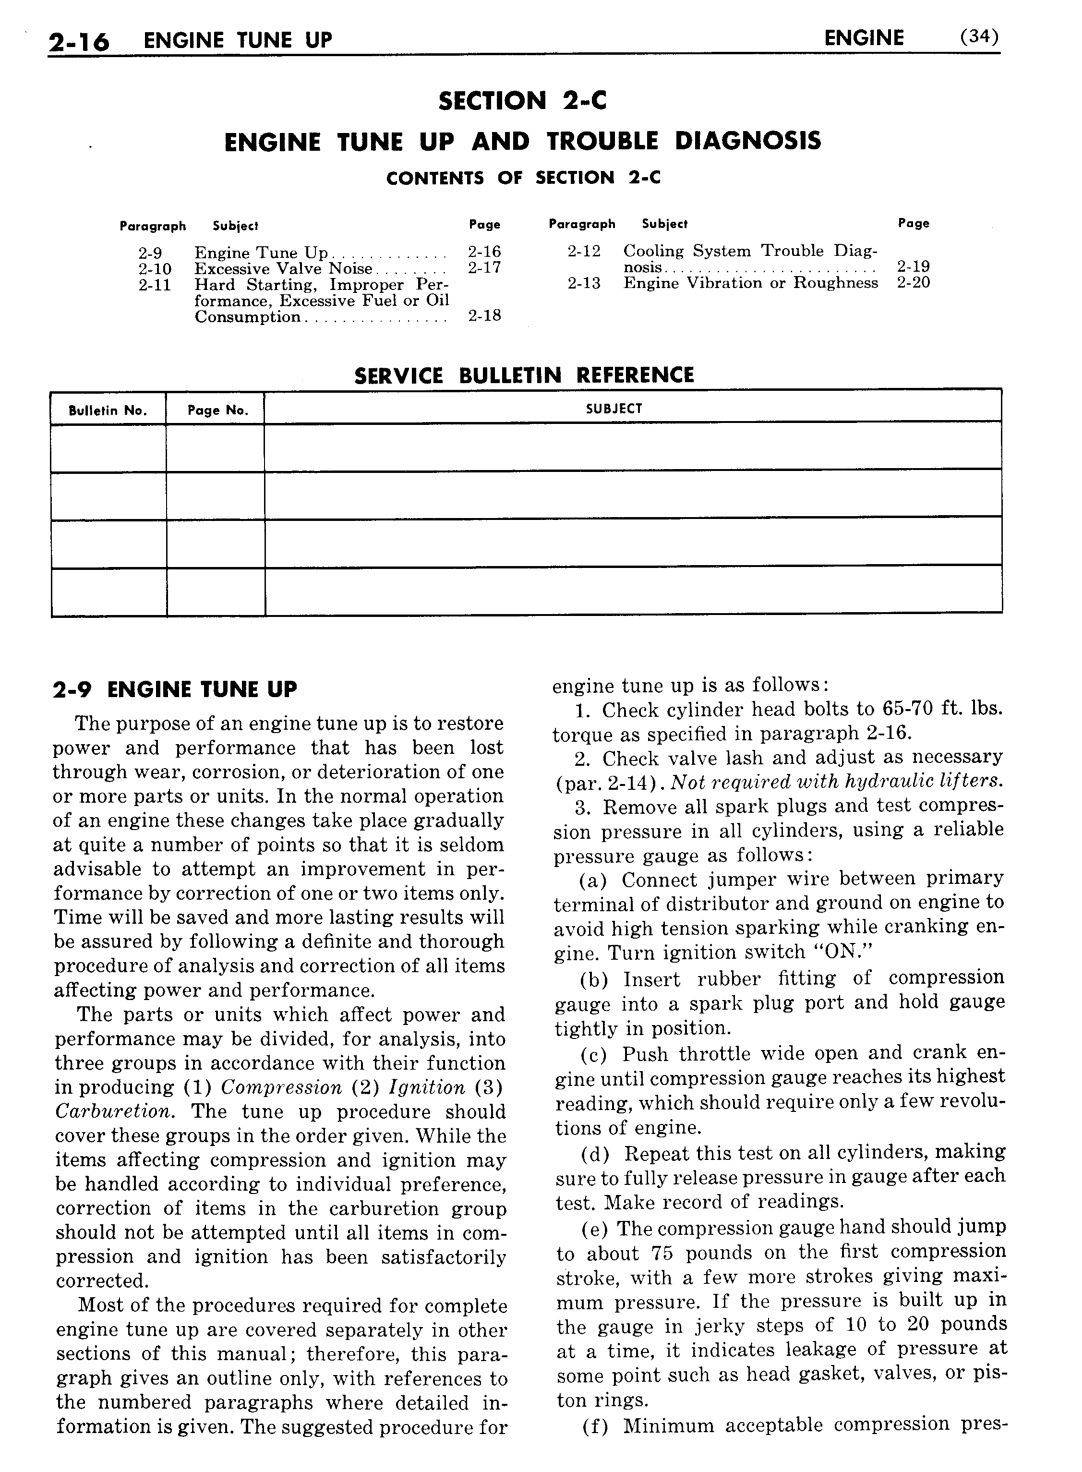 n_03 1951 Buick Shop Manual - Engine-016-016.jpg